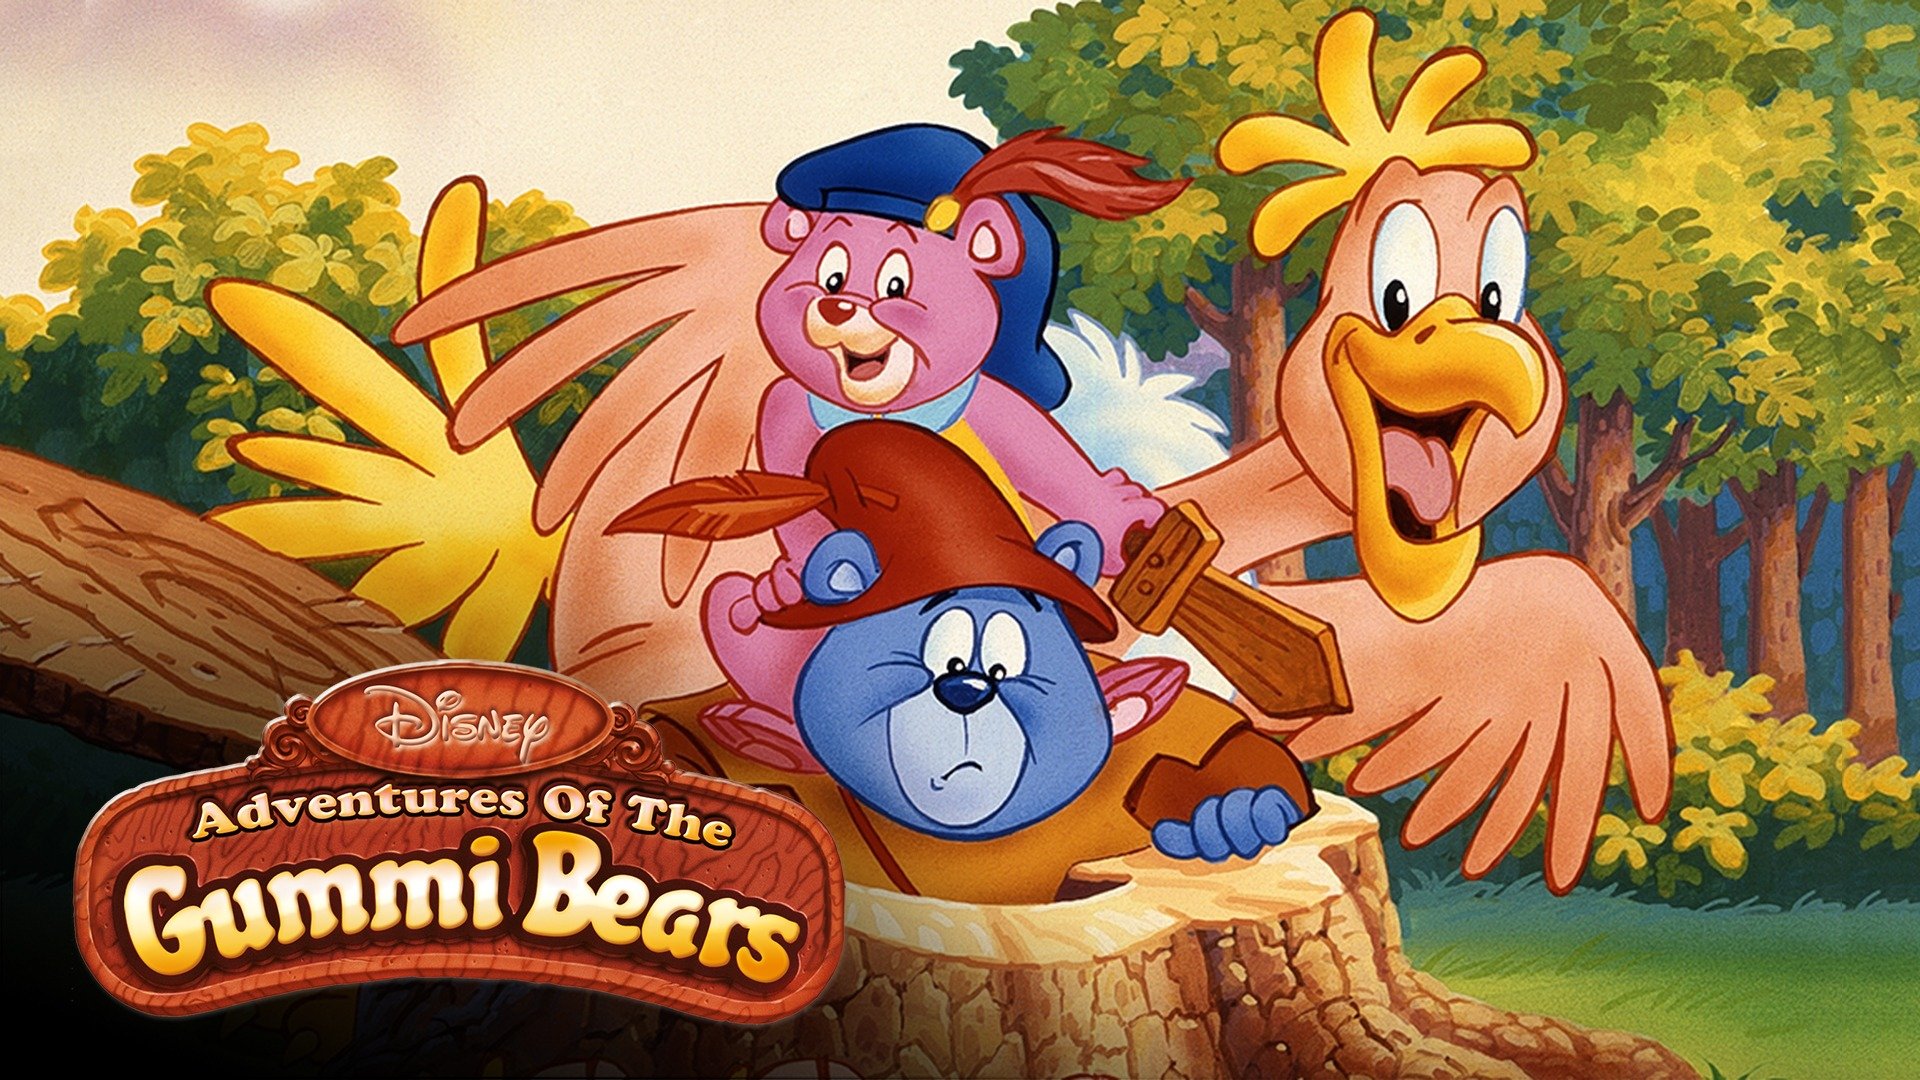 Adventures of the Gummi Bears to watch episodes online